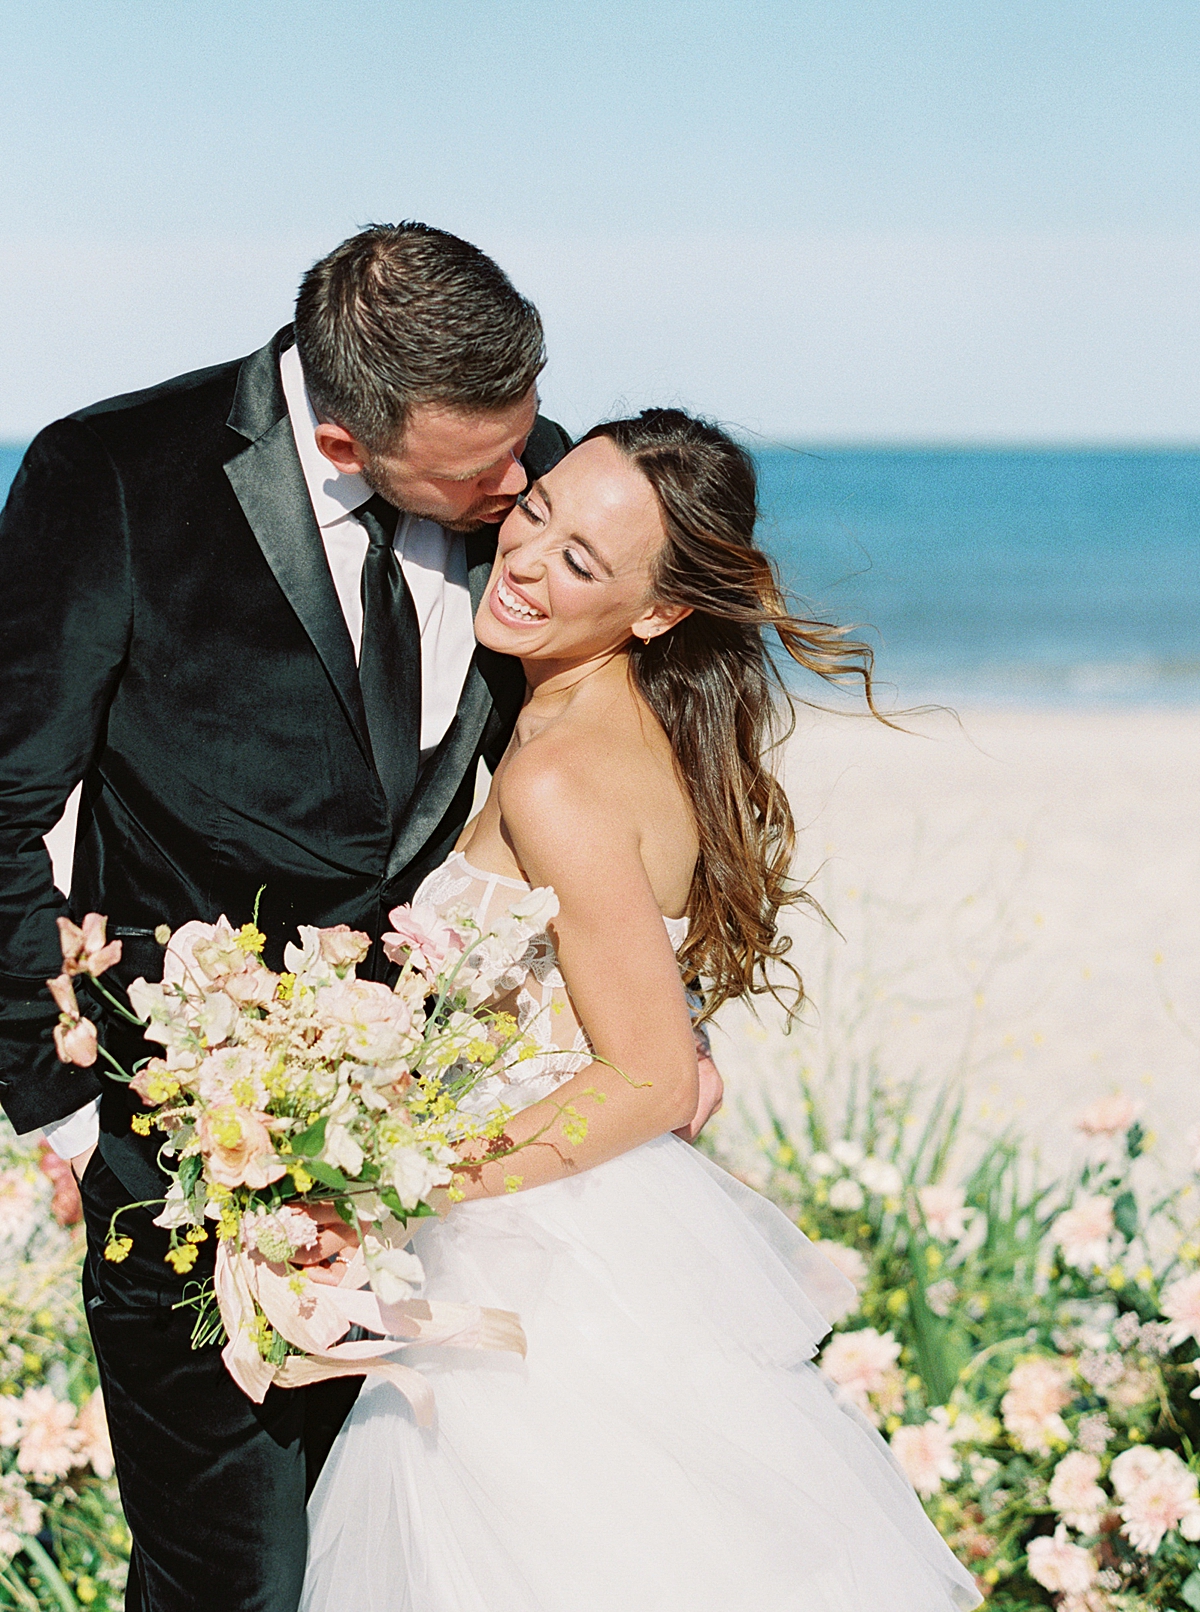 A groom kisses his bride on the beach at their Florida destination wedding.